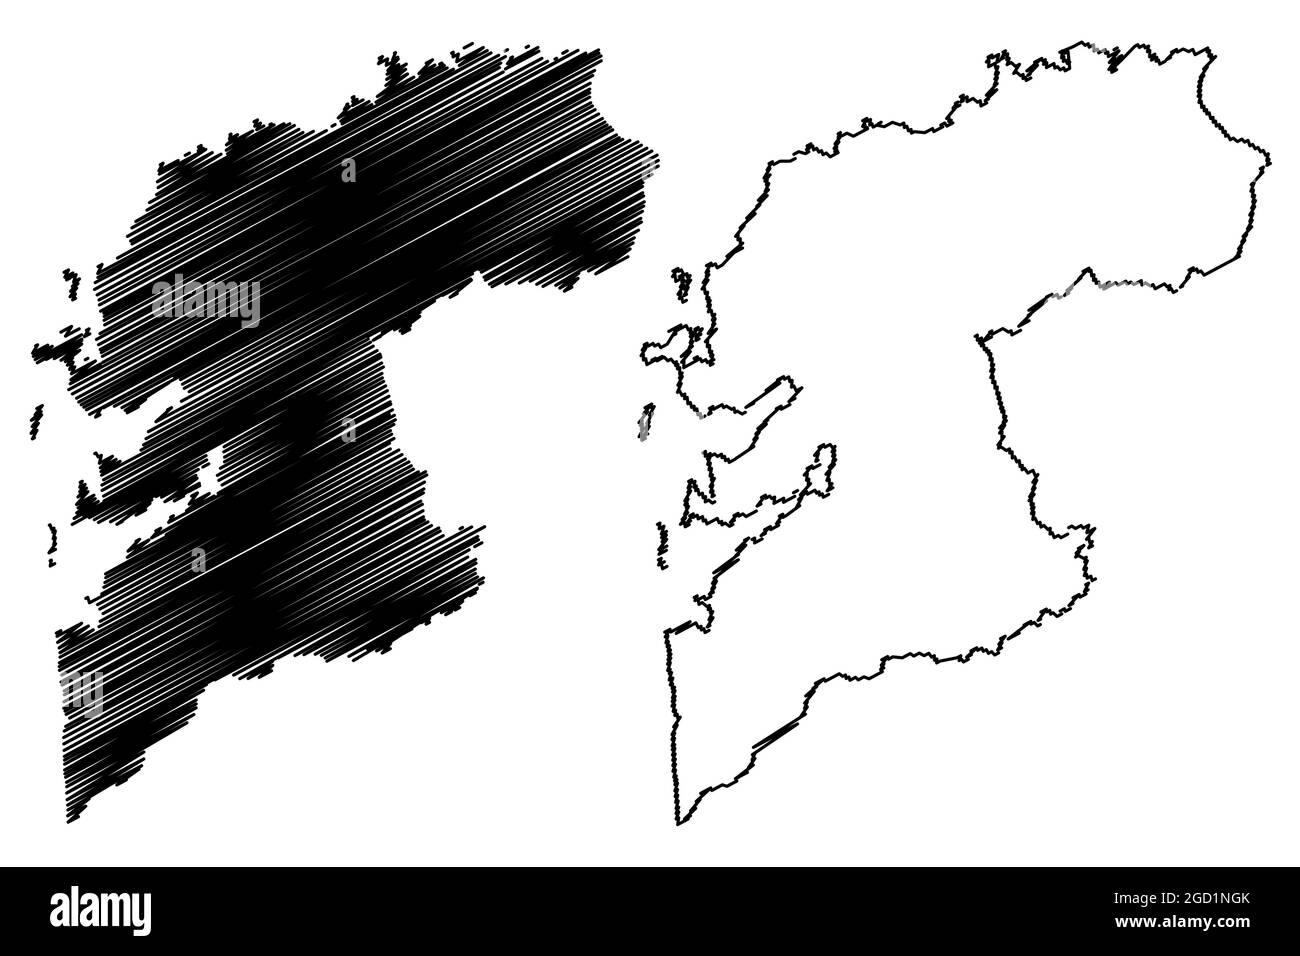 Province of Pontevedra (Kingdom of Spain, Autonomous community of Galicia) map vector illustration, scribble sketch Pontevedra map Stock Vector